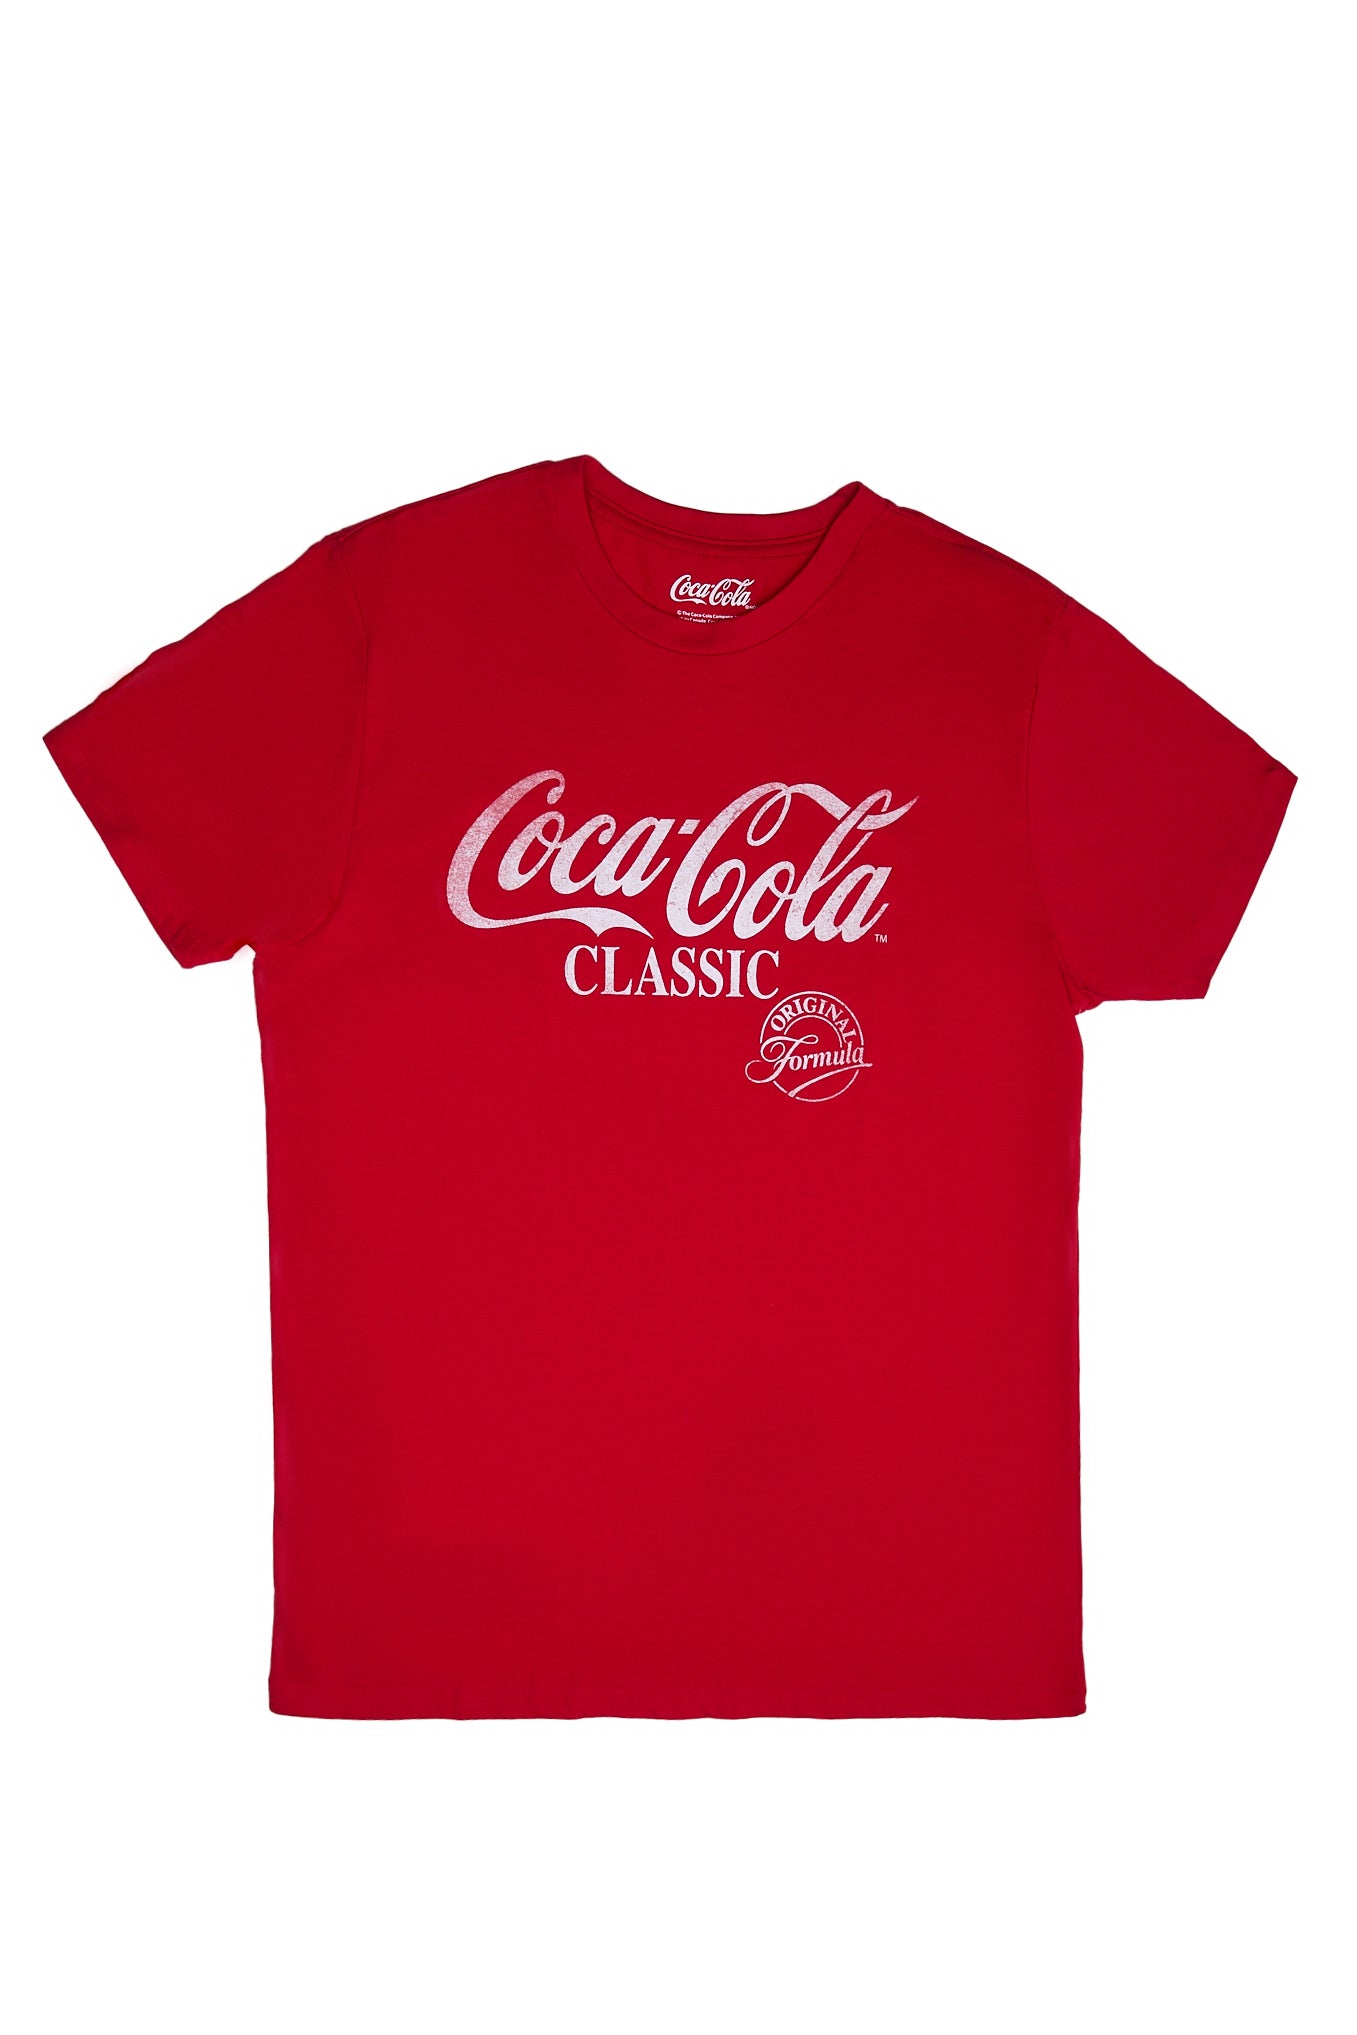 Coca-Cola Classic Graphic Tee